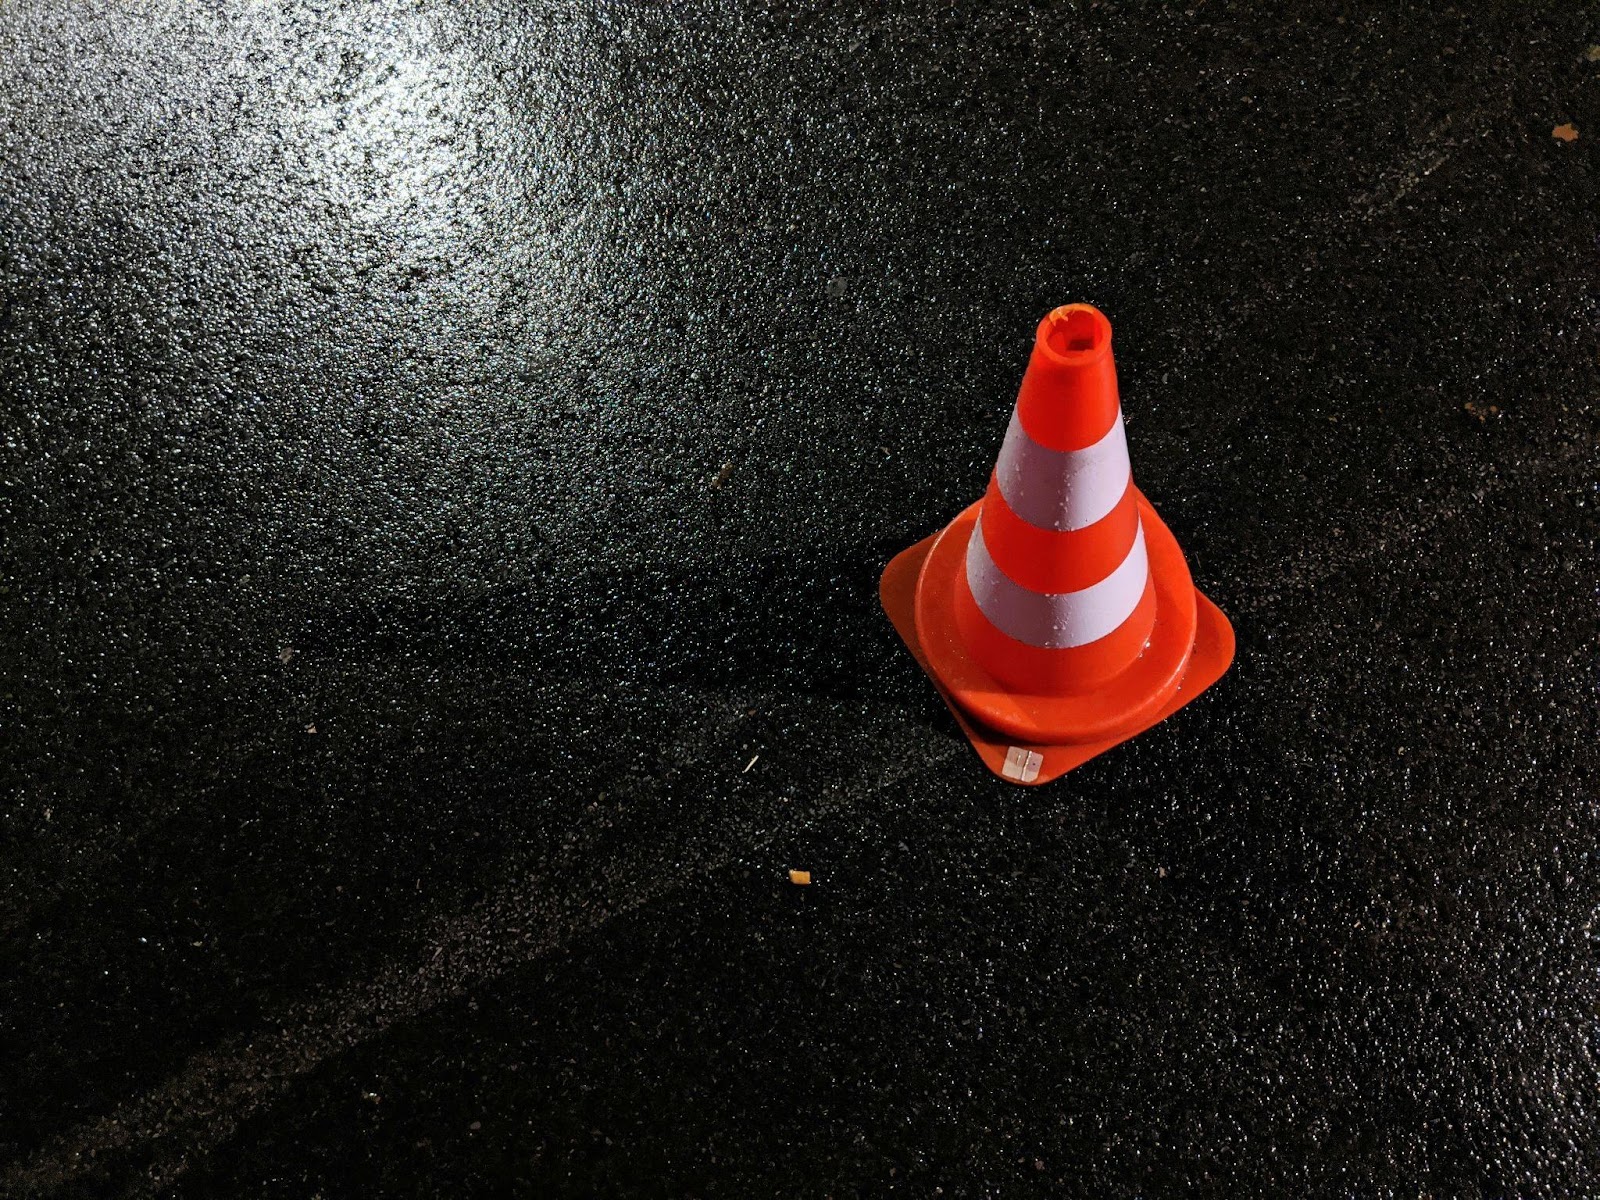 https://unsplash.com/photos/orange-and-white-traffic-cone-p3Ip8U0eNNM